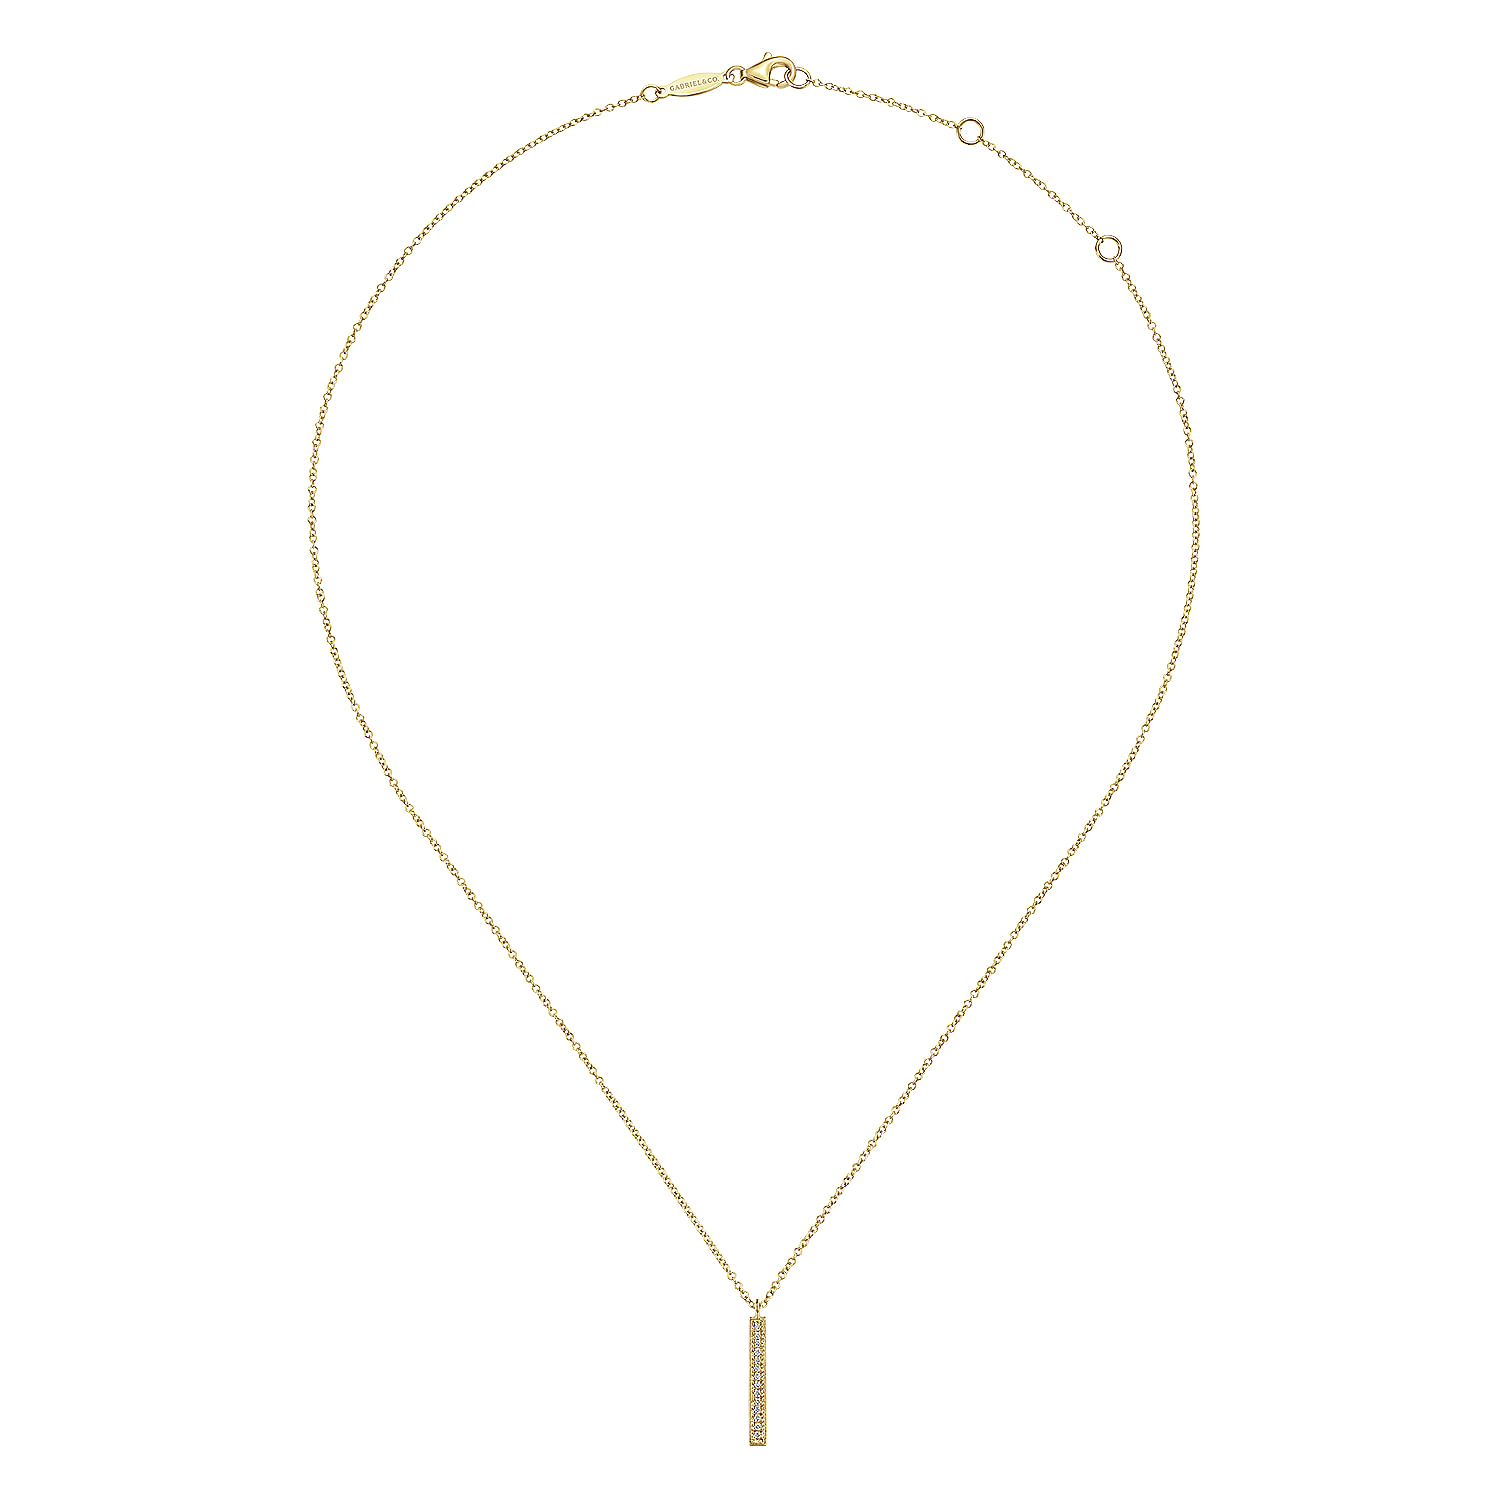 14K Yellow Gold Diamond Drop Pendant Necklace